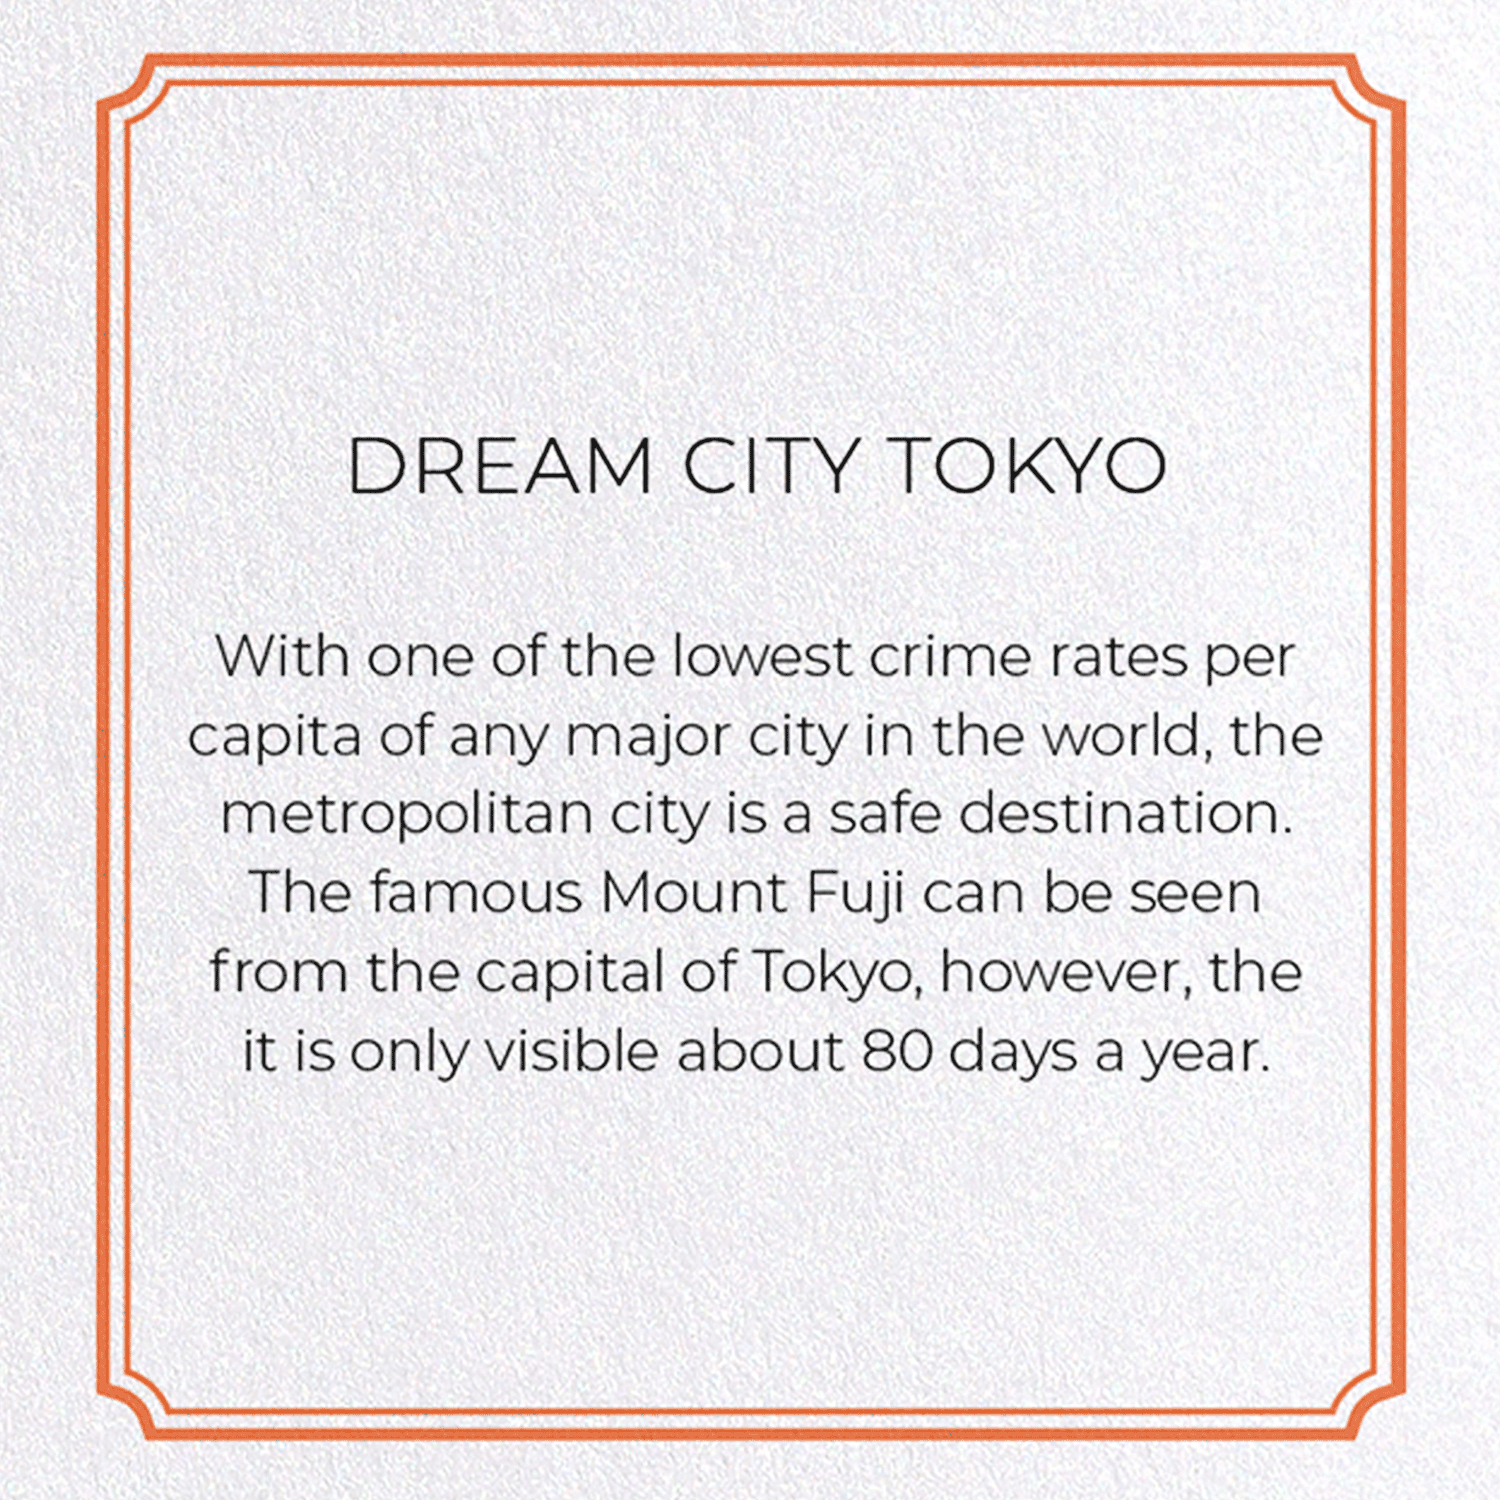 DREAM CITY TOKYO